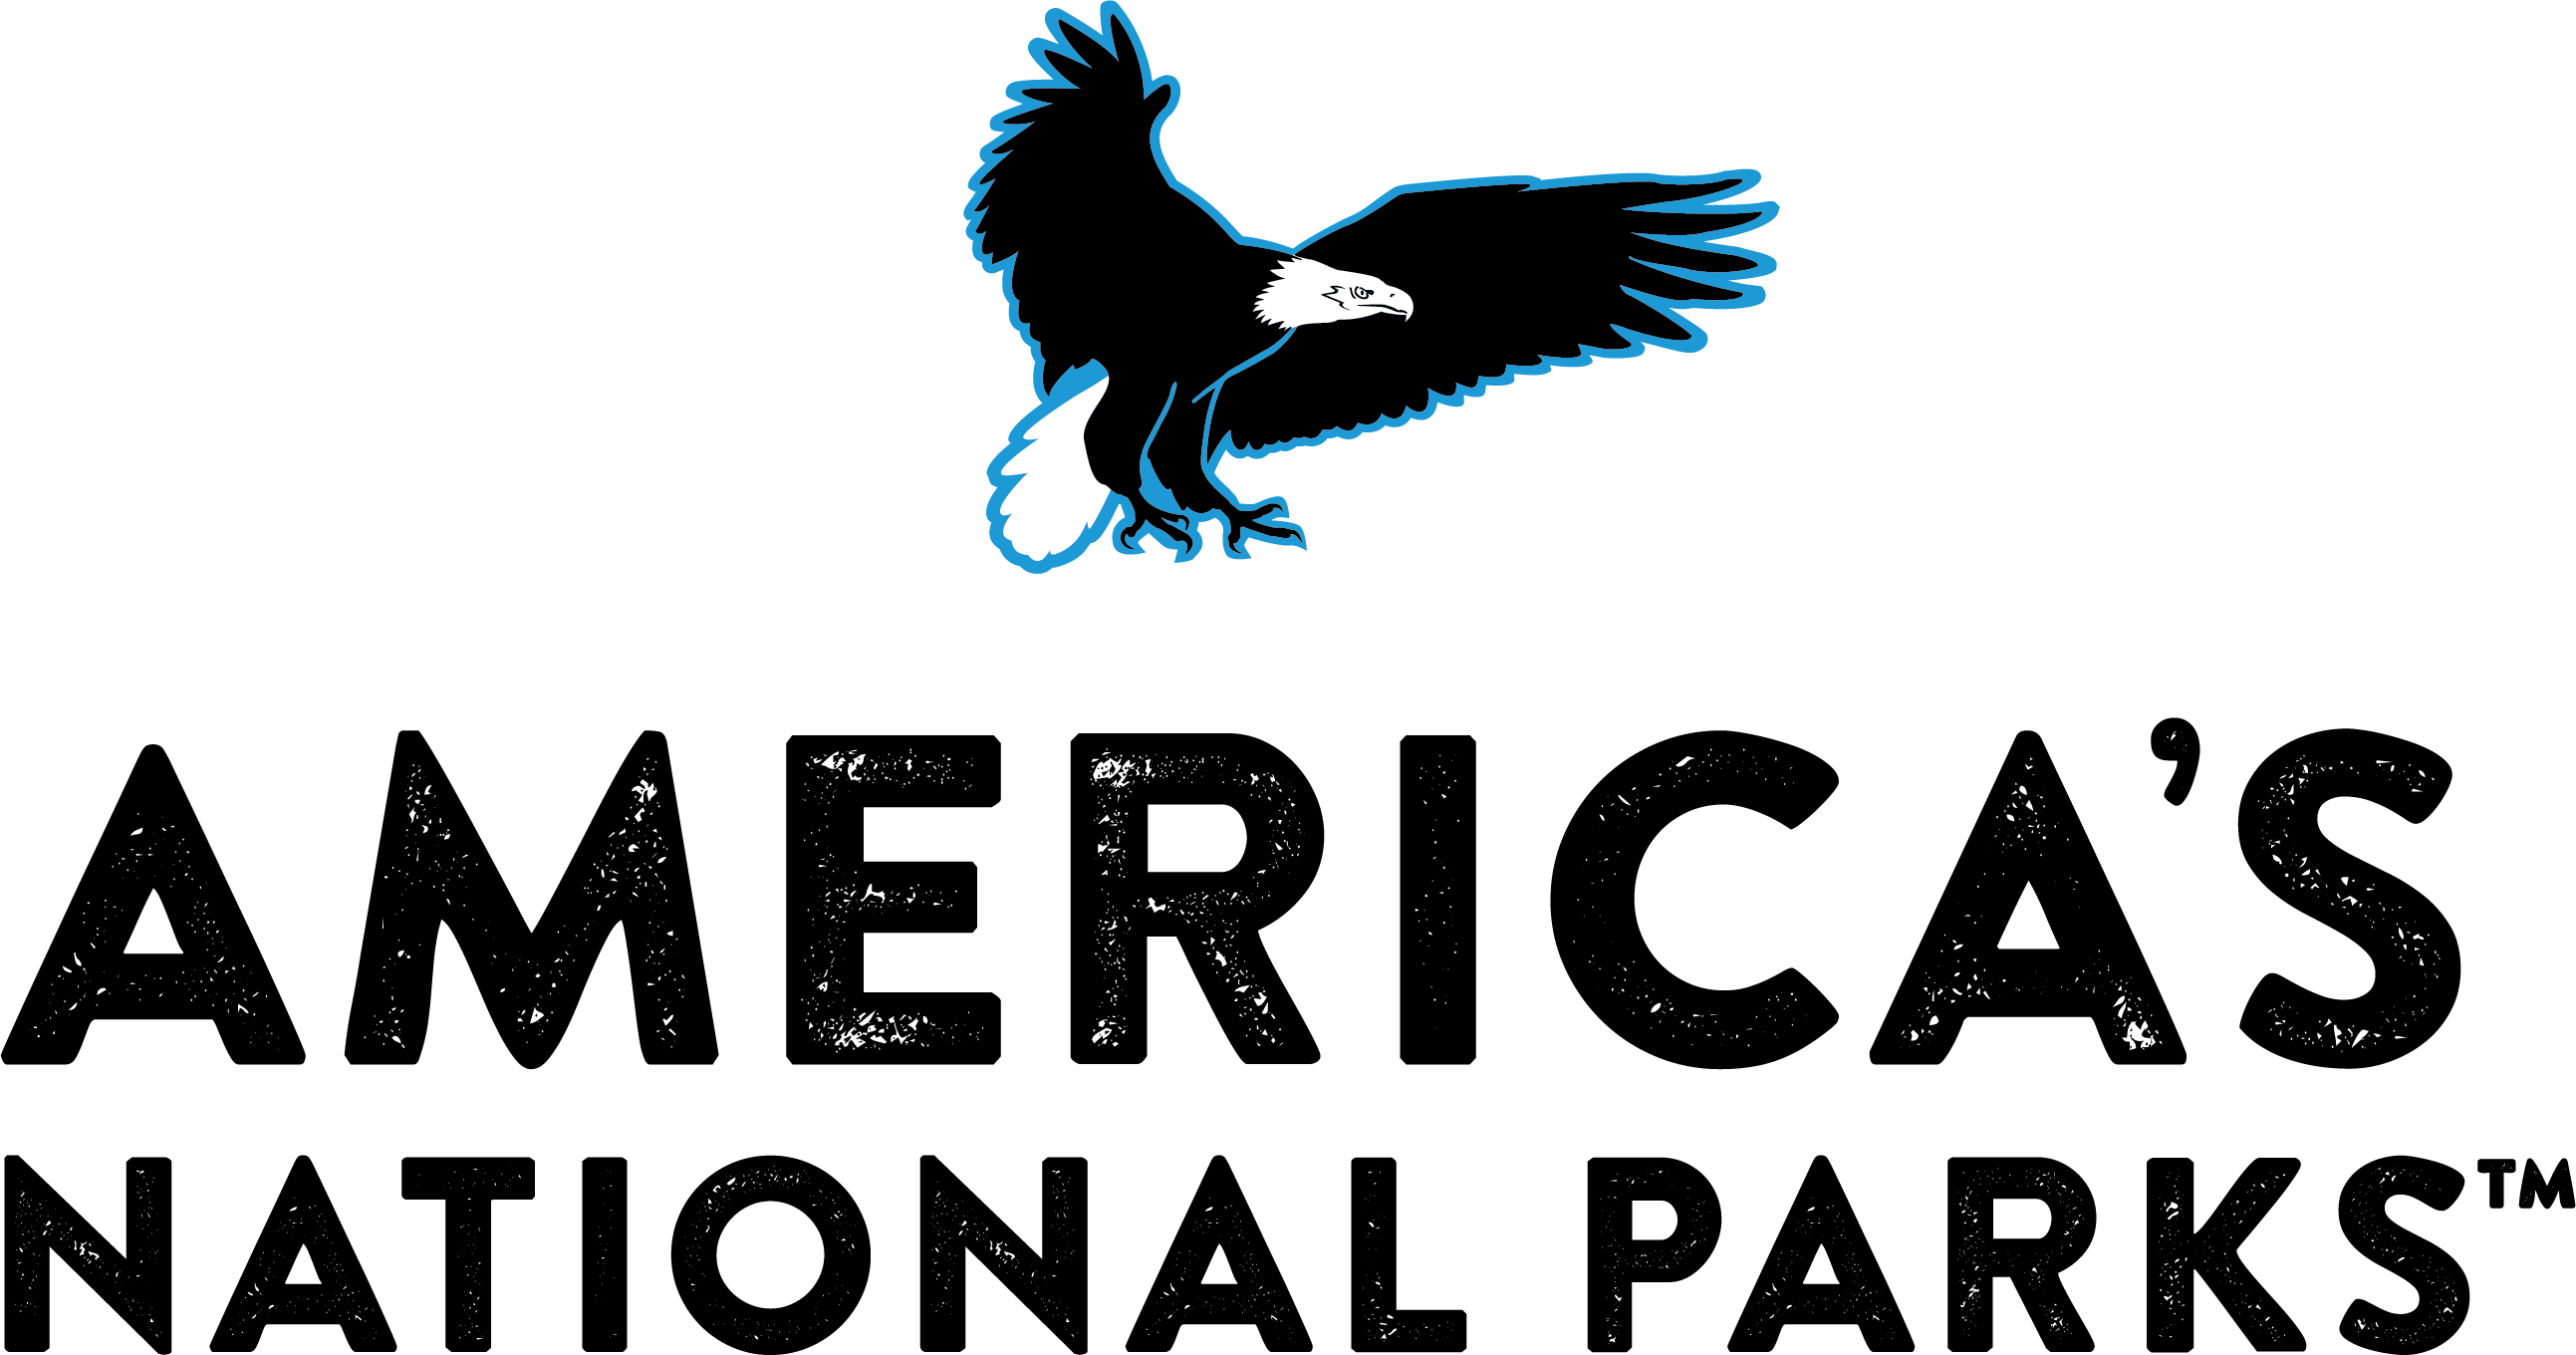 Americas National Park logo with eagle